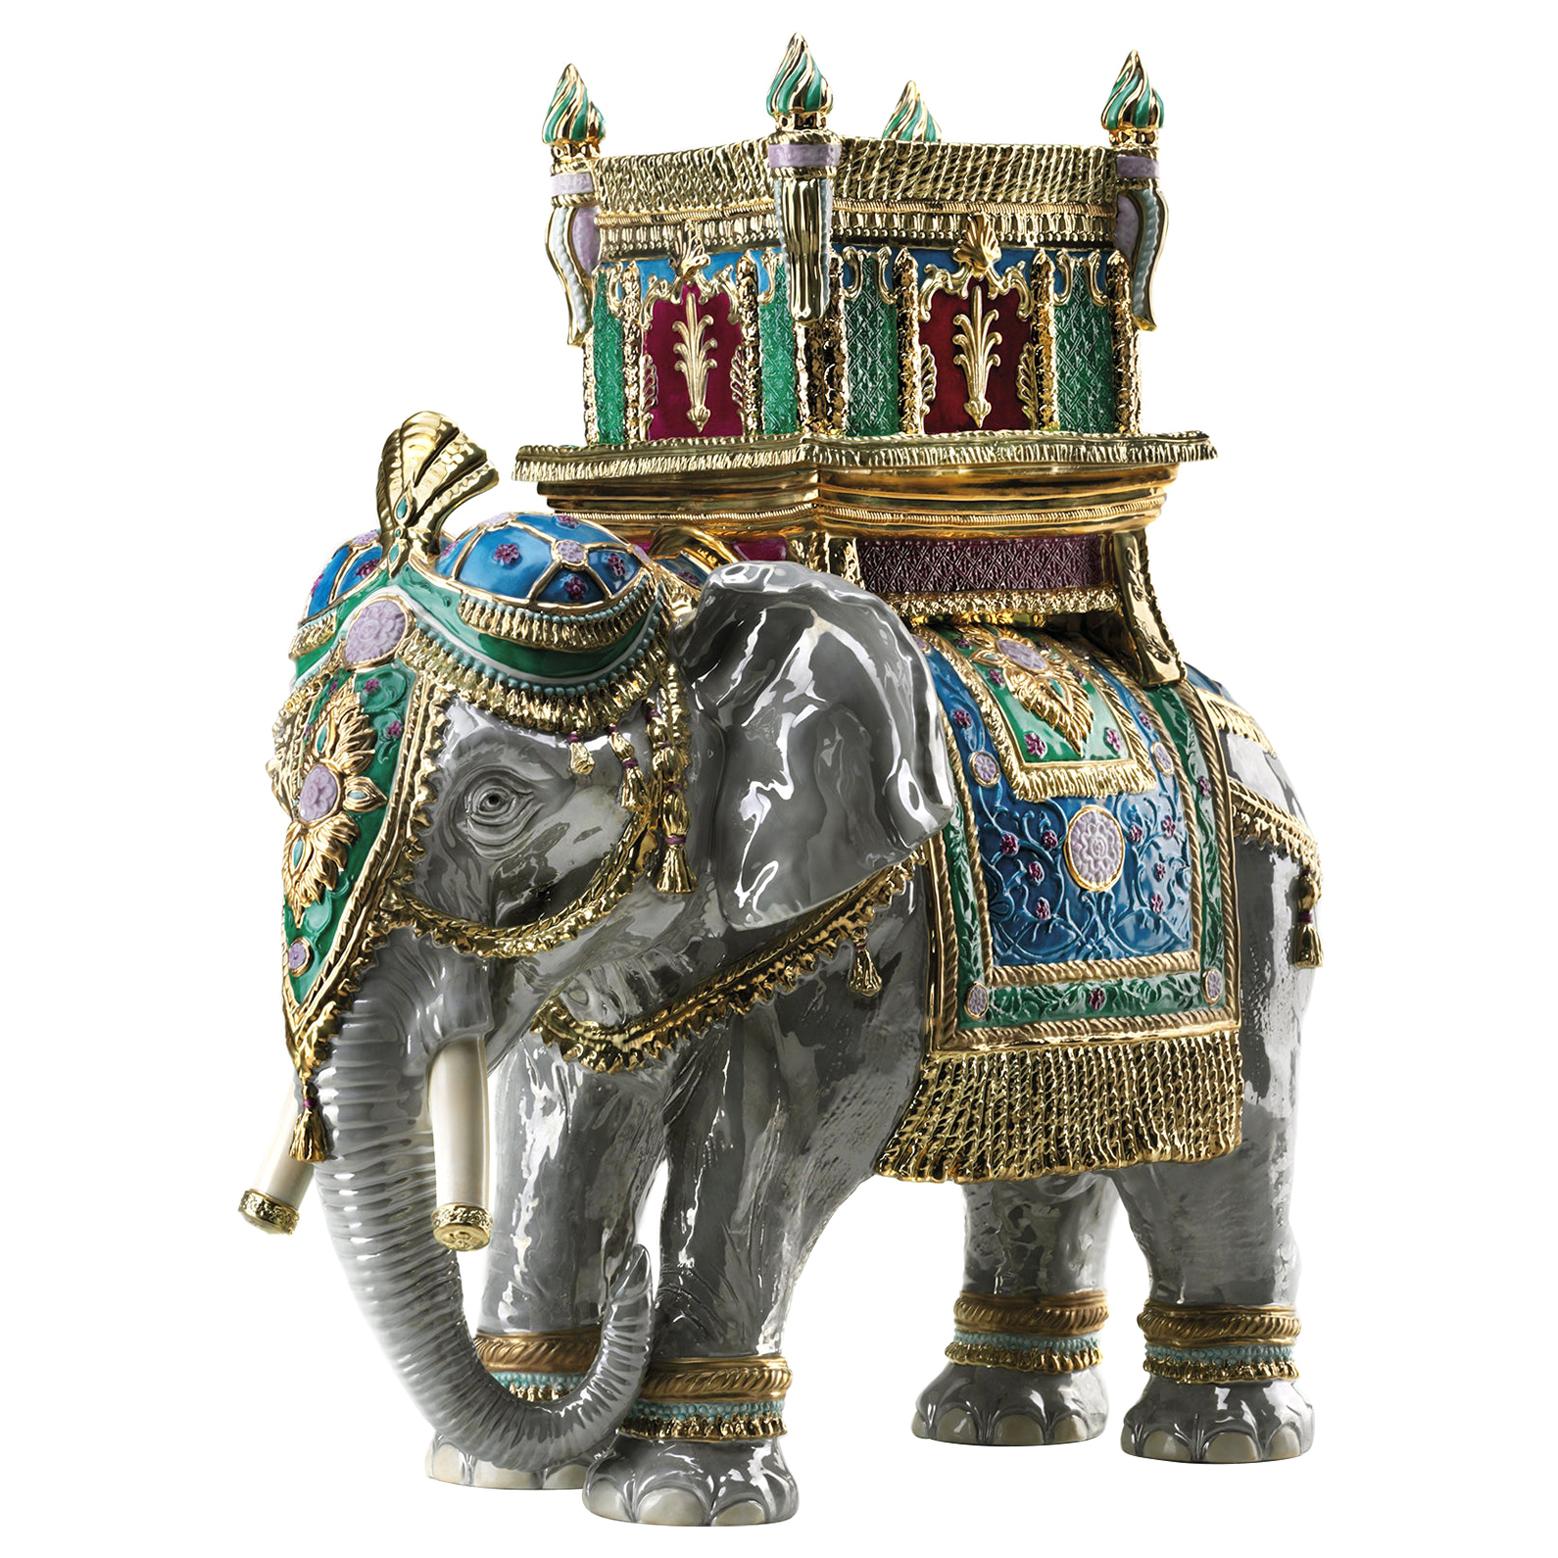 Grüne Elefanten-Skulptur aus Udaipur